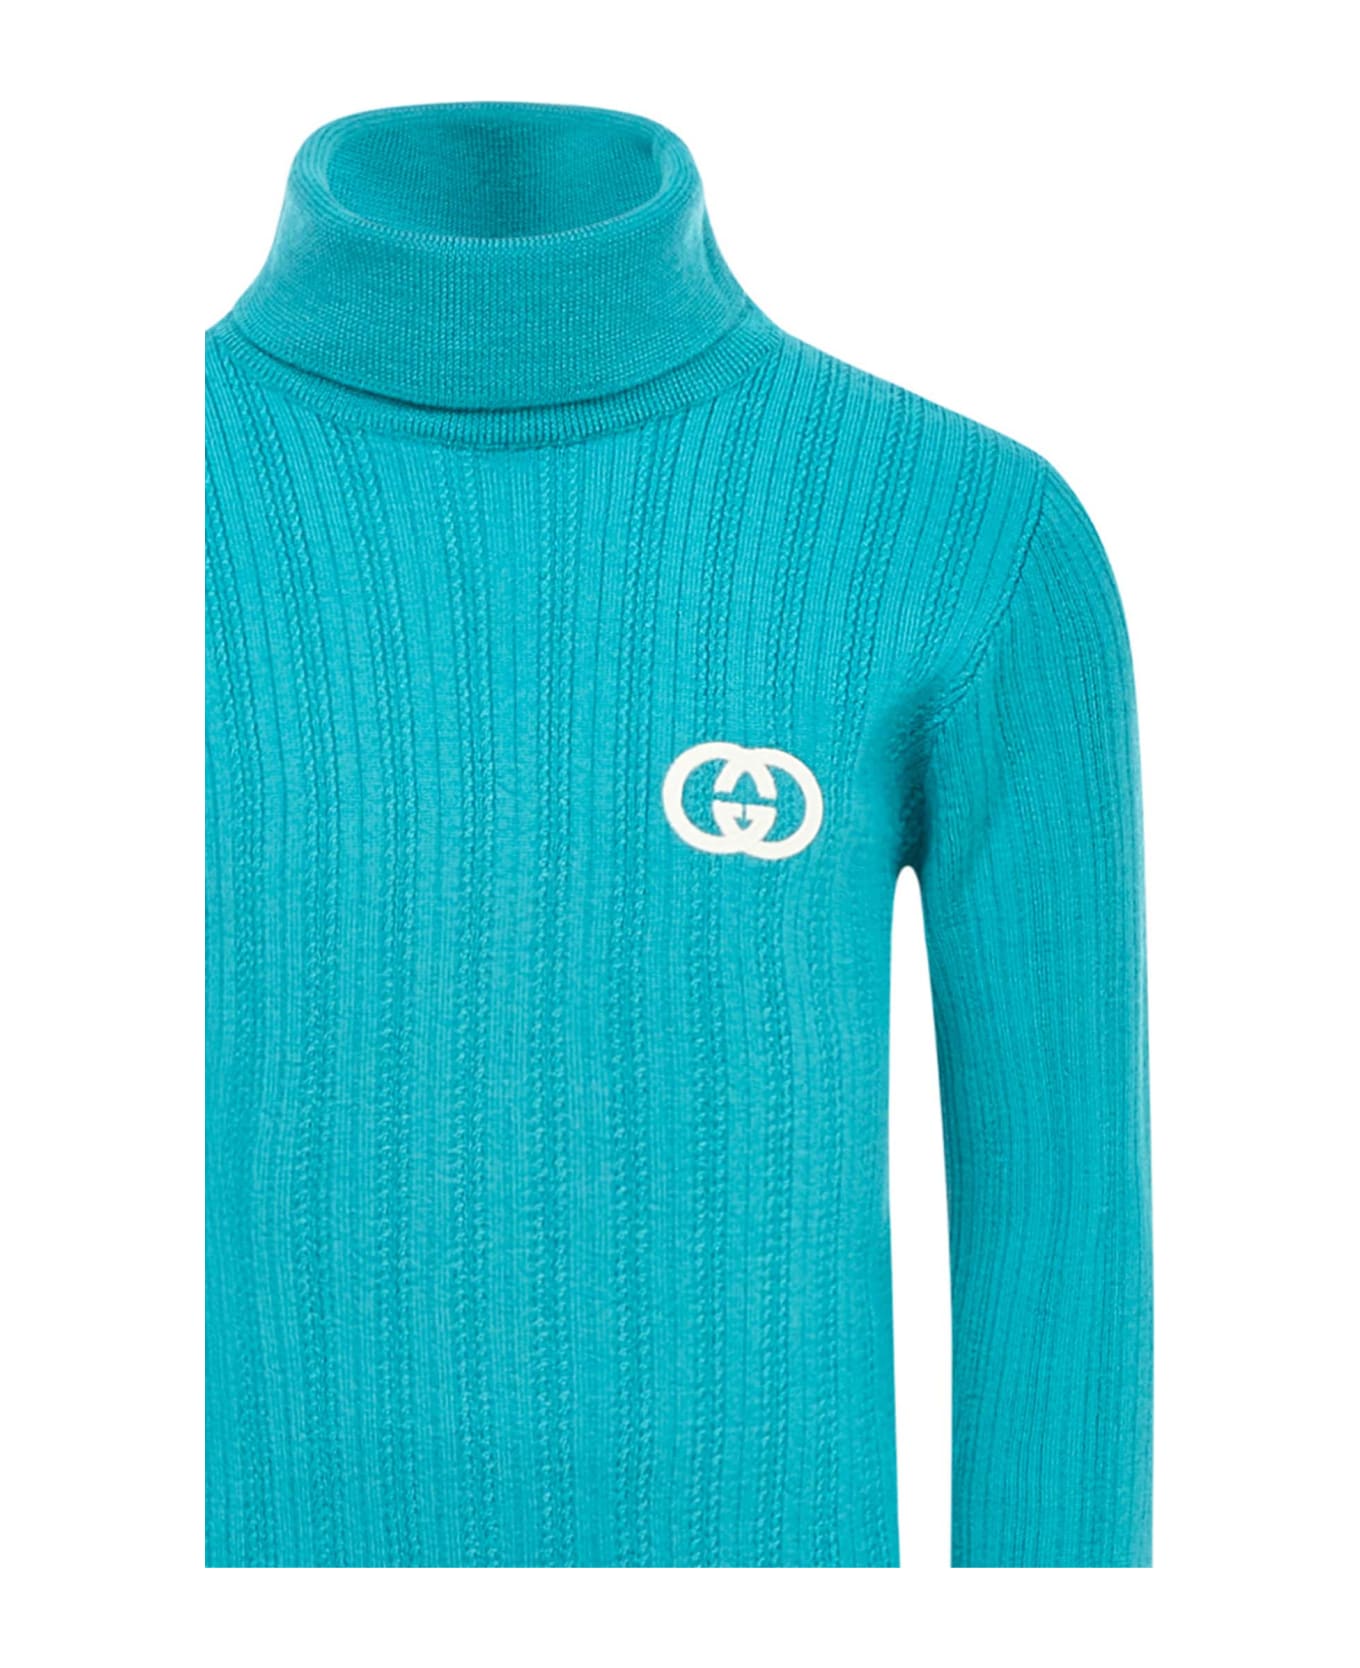 Gucci Sweater - Light blue